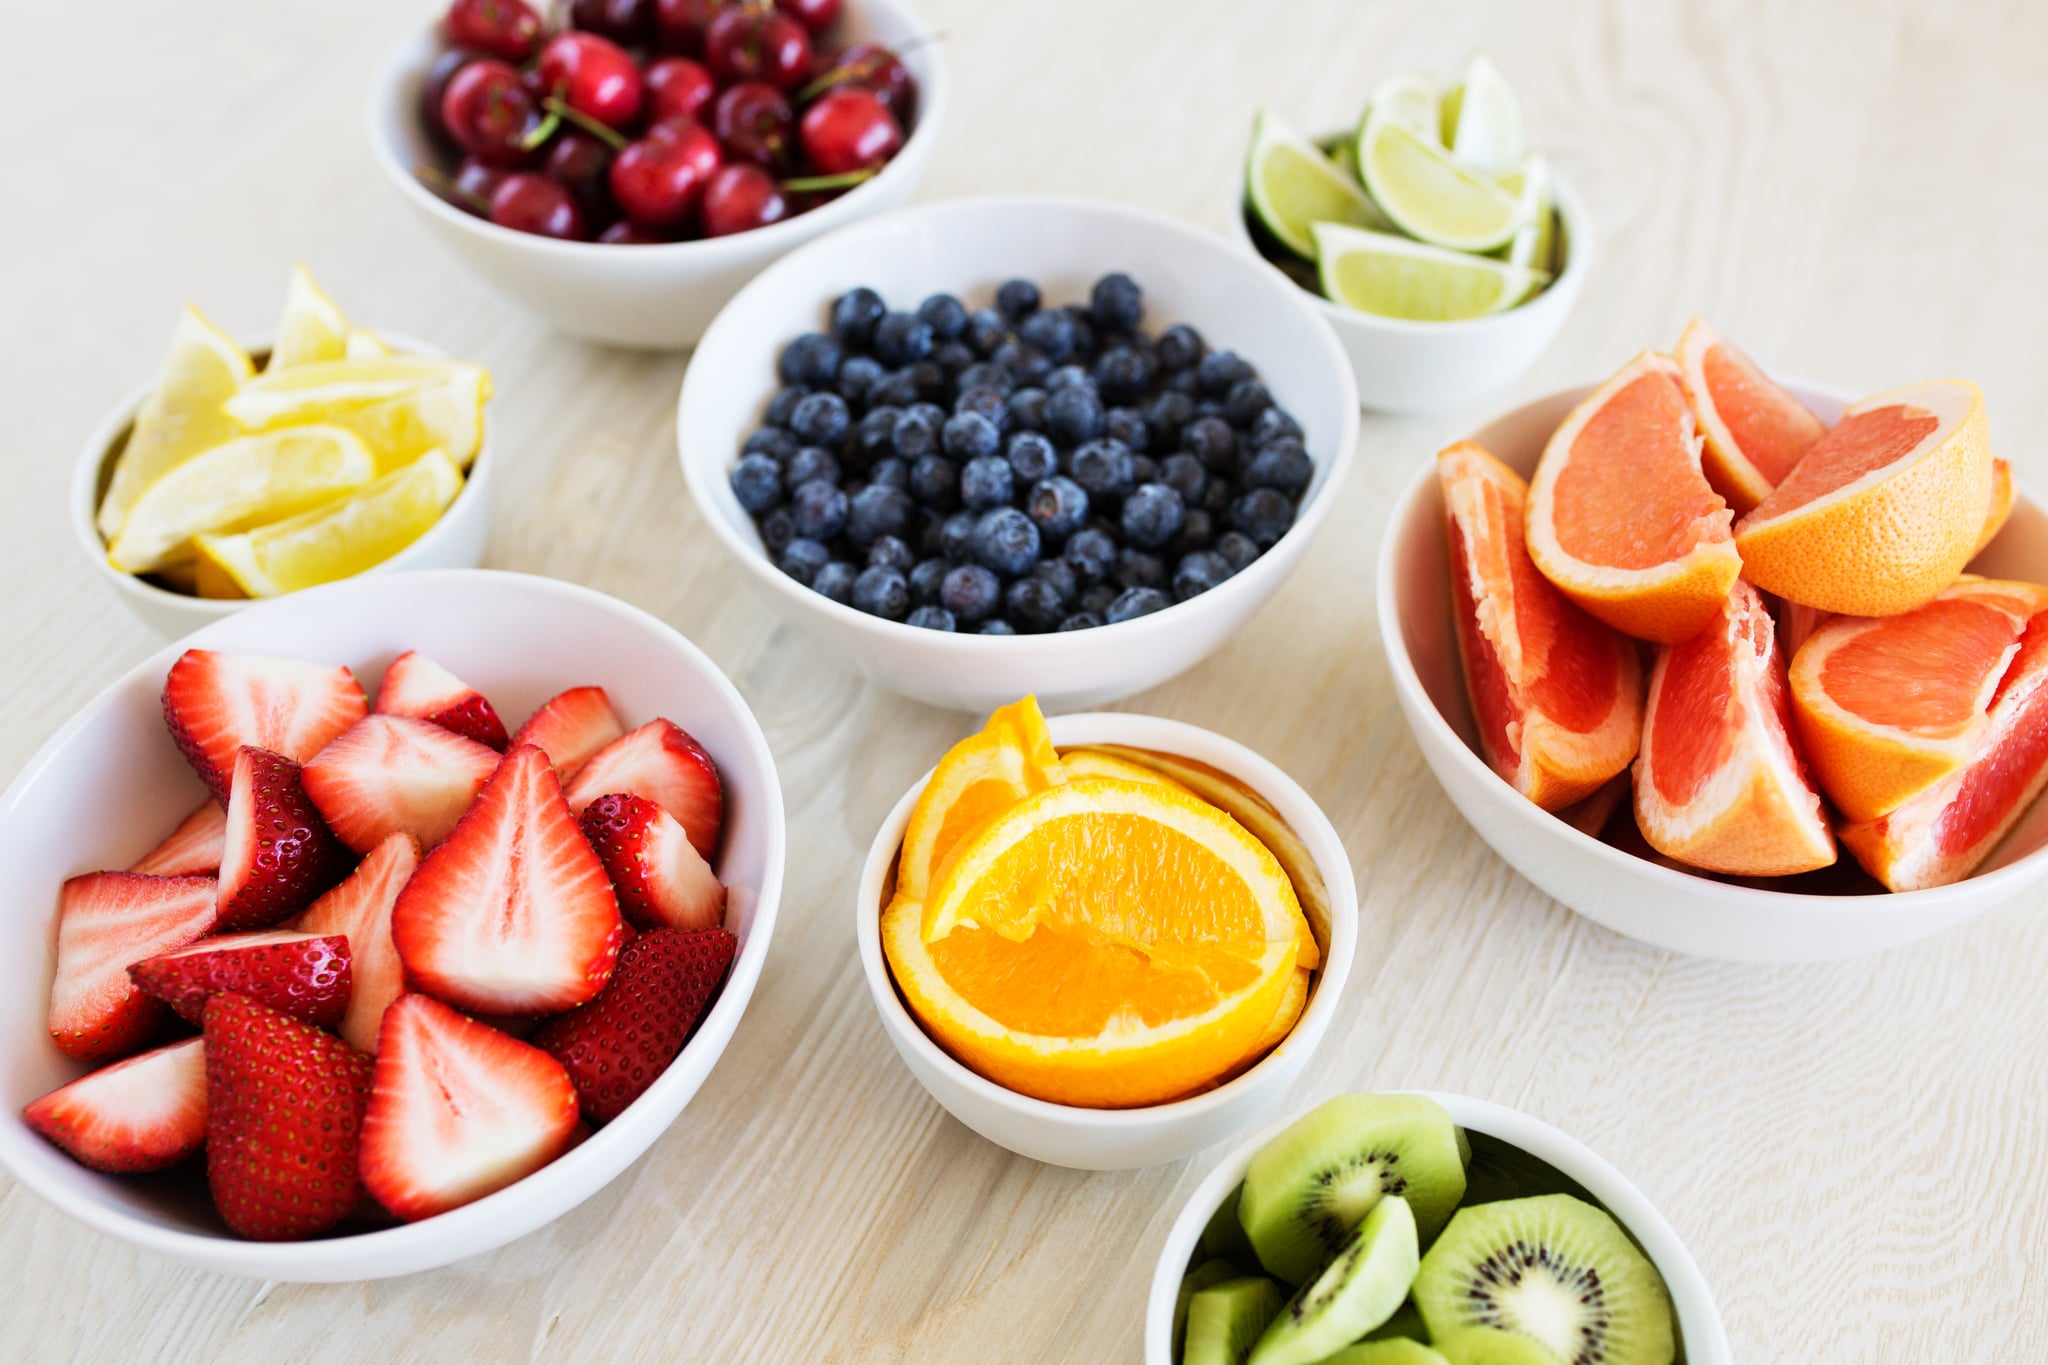 Fresh Fruit Calorie Chart